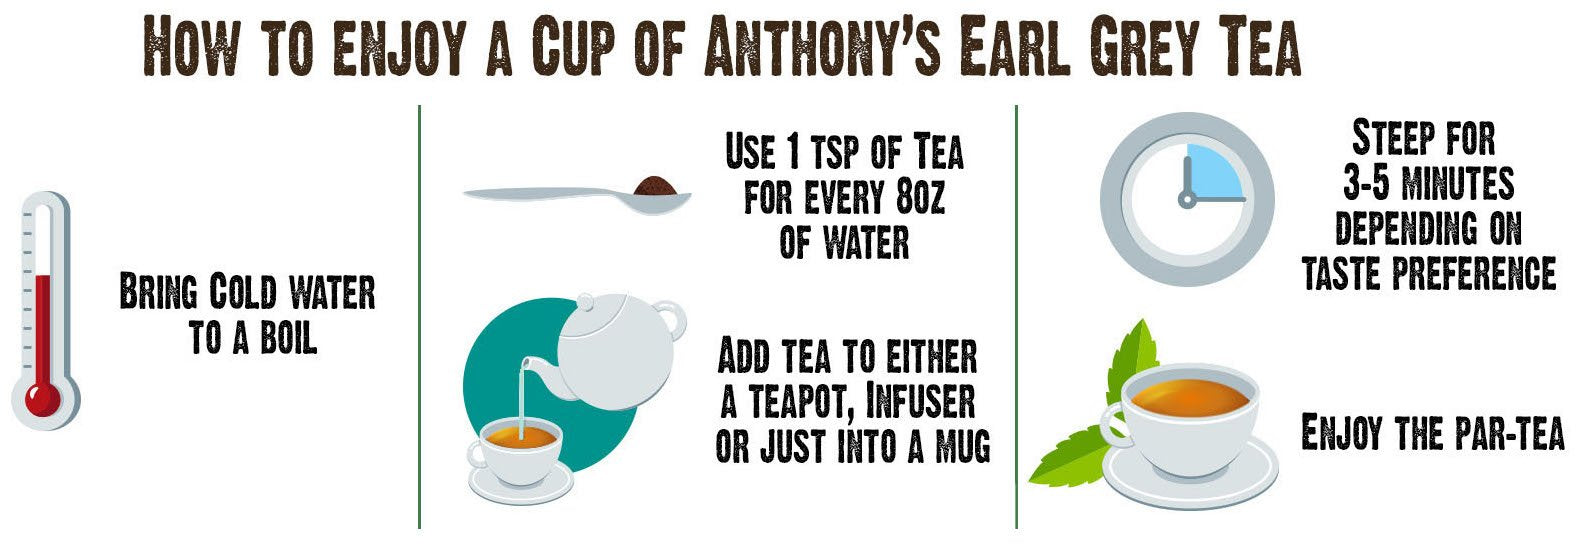 Organic Earl Grey Tea: Loose Leaf, Batch Tested Gluten-Free, Non-GMO & Vegan